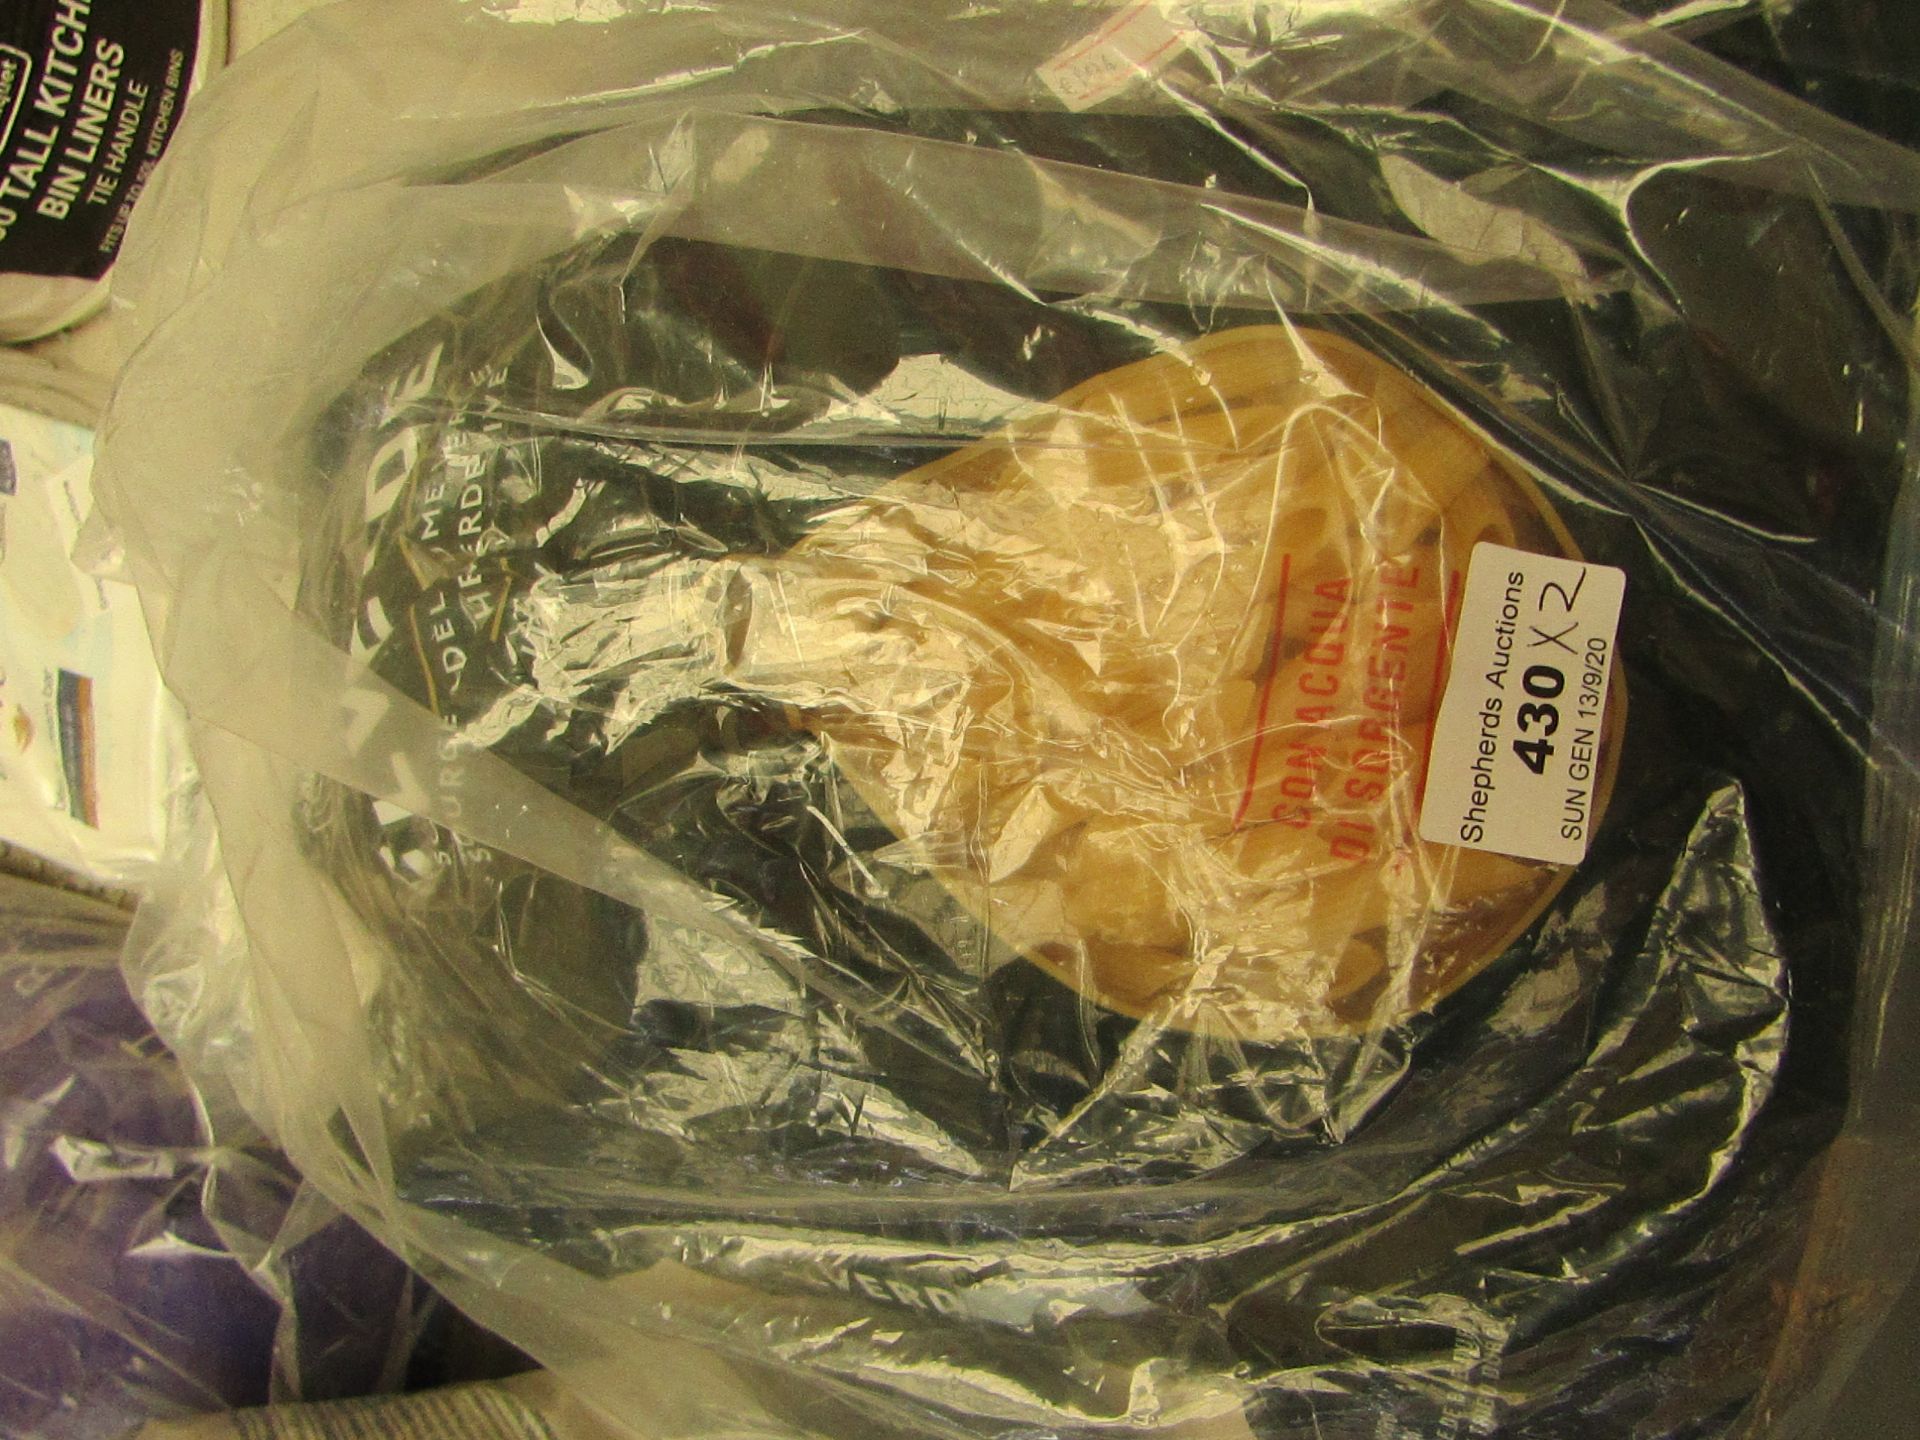 2 x kg Delverde Pastas. Bags have split but have been rebagged